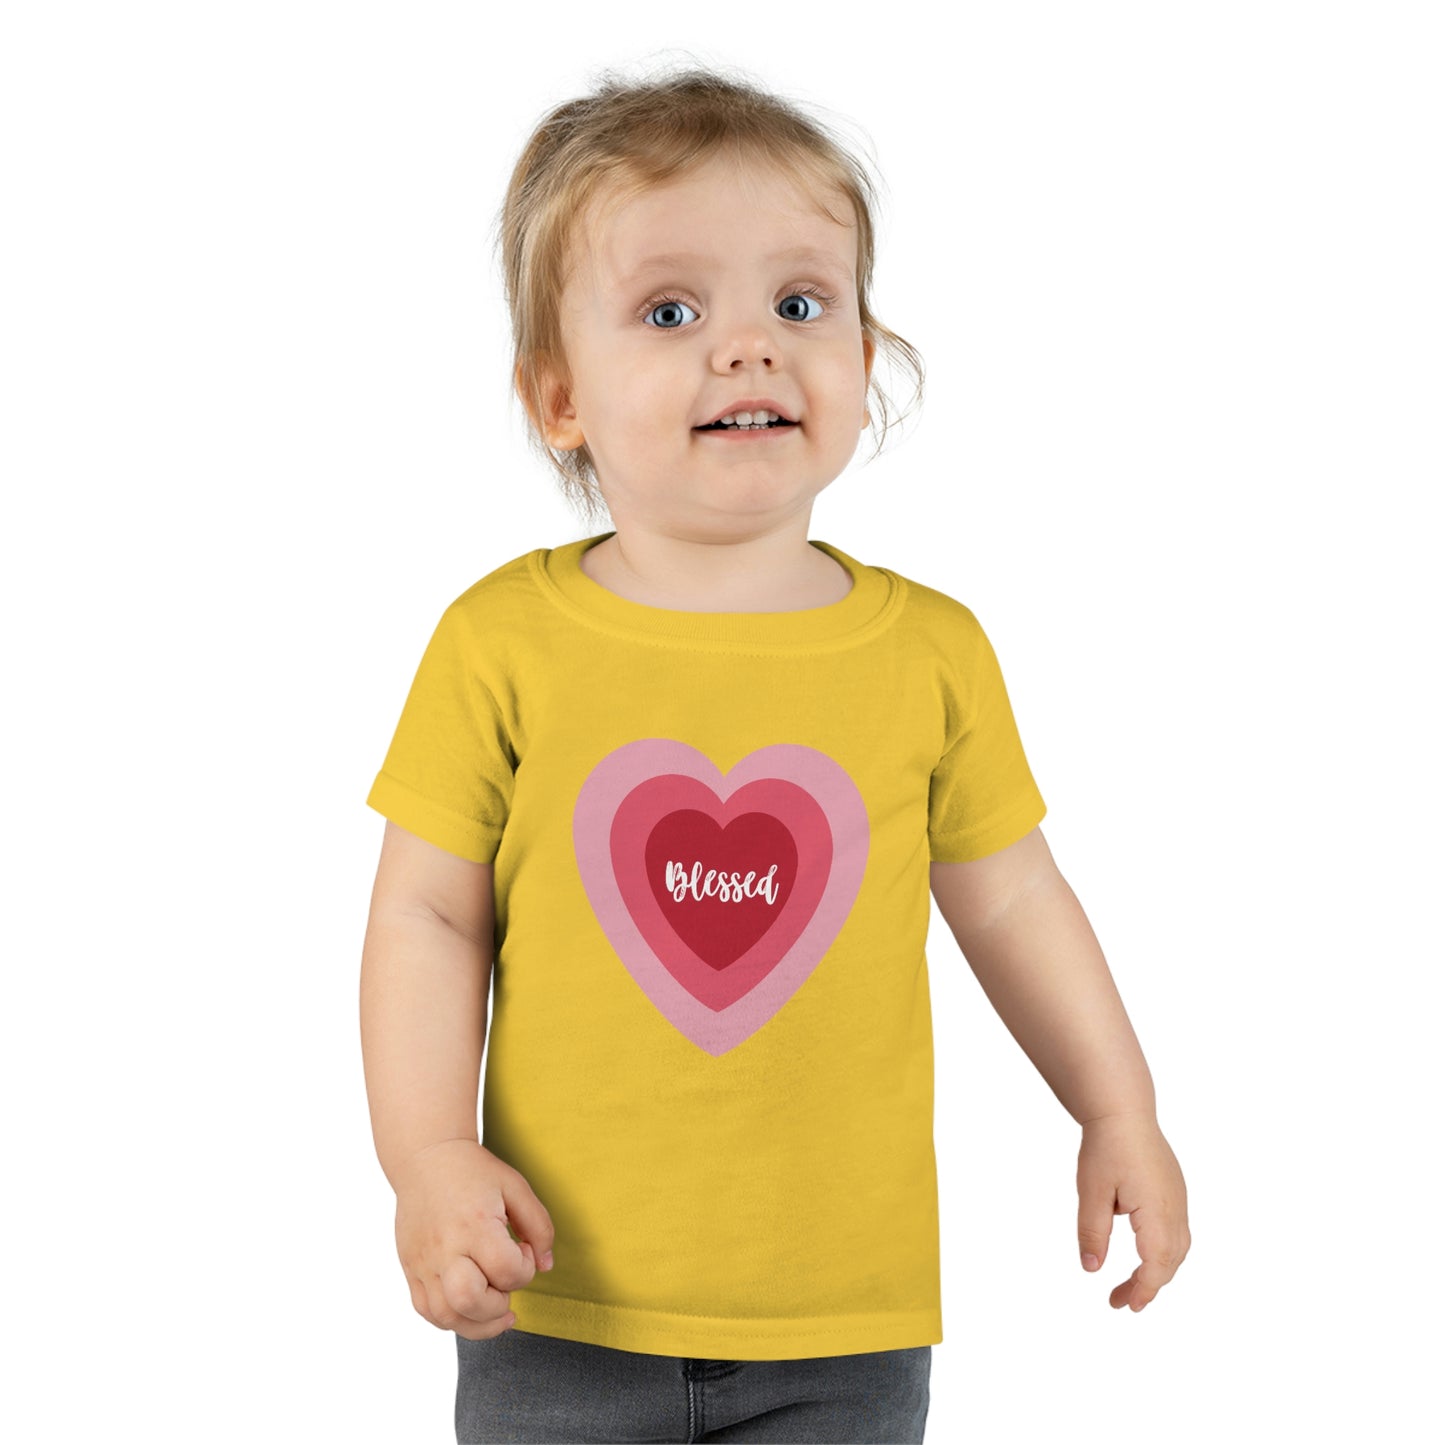 Blessed Heart - Toddler T-shirt